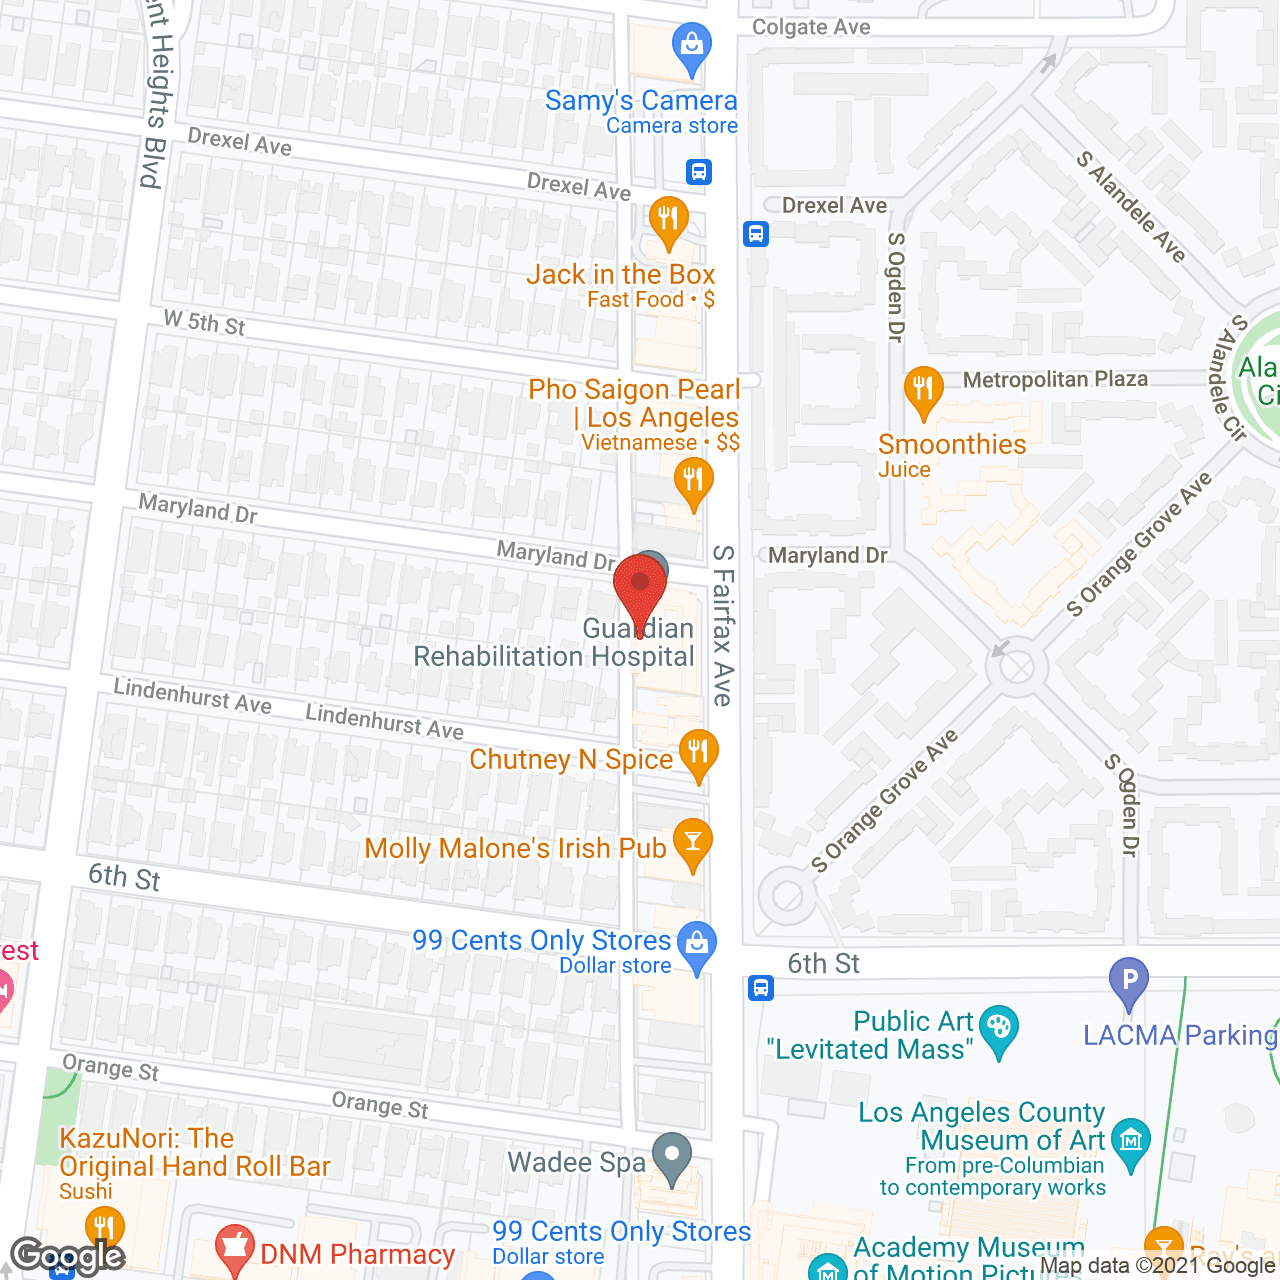 Guardian Rehabilitation Hospital in google map